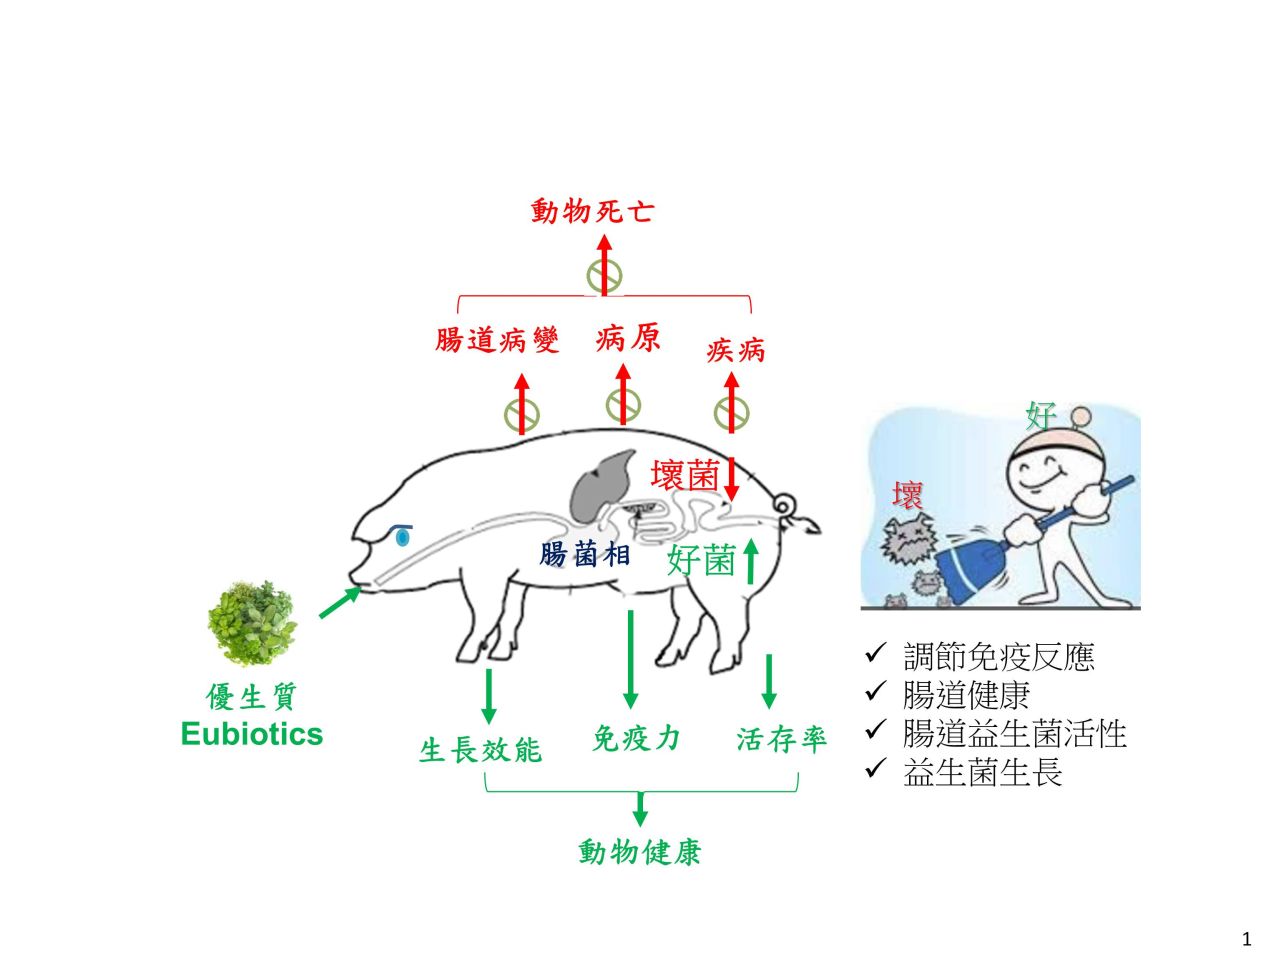 Eubiotics for human and animal health